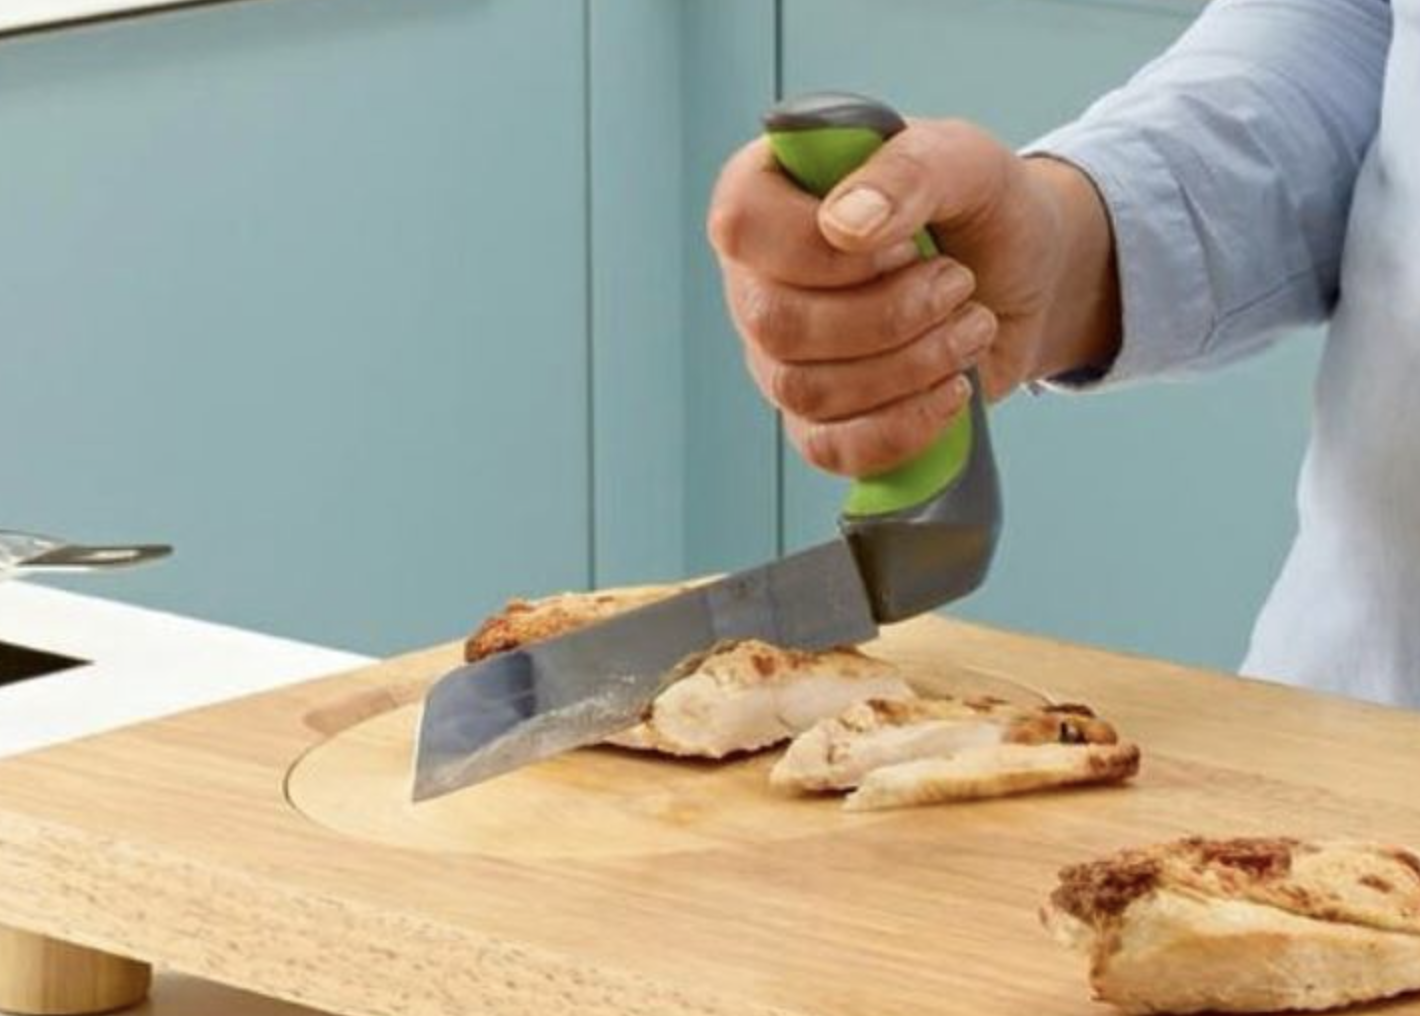 Top 10 arthritis-friendly kitchen tools - Seasons